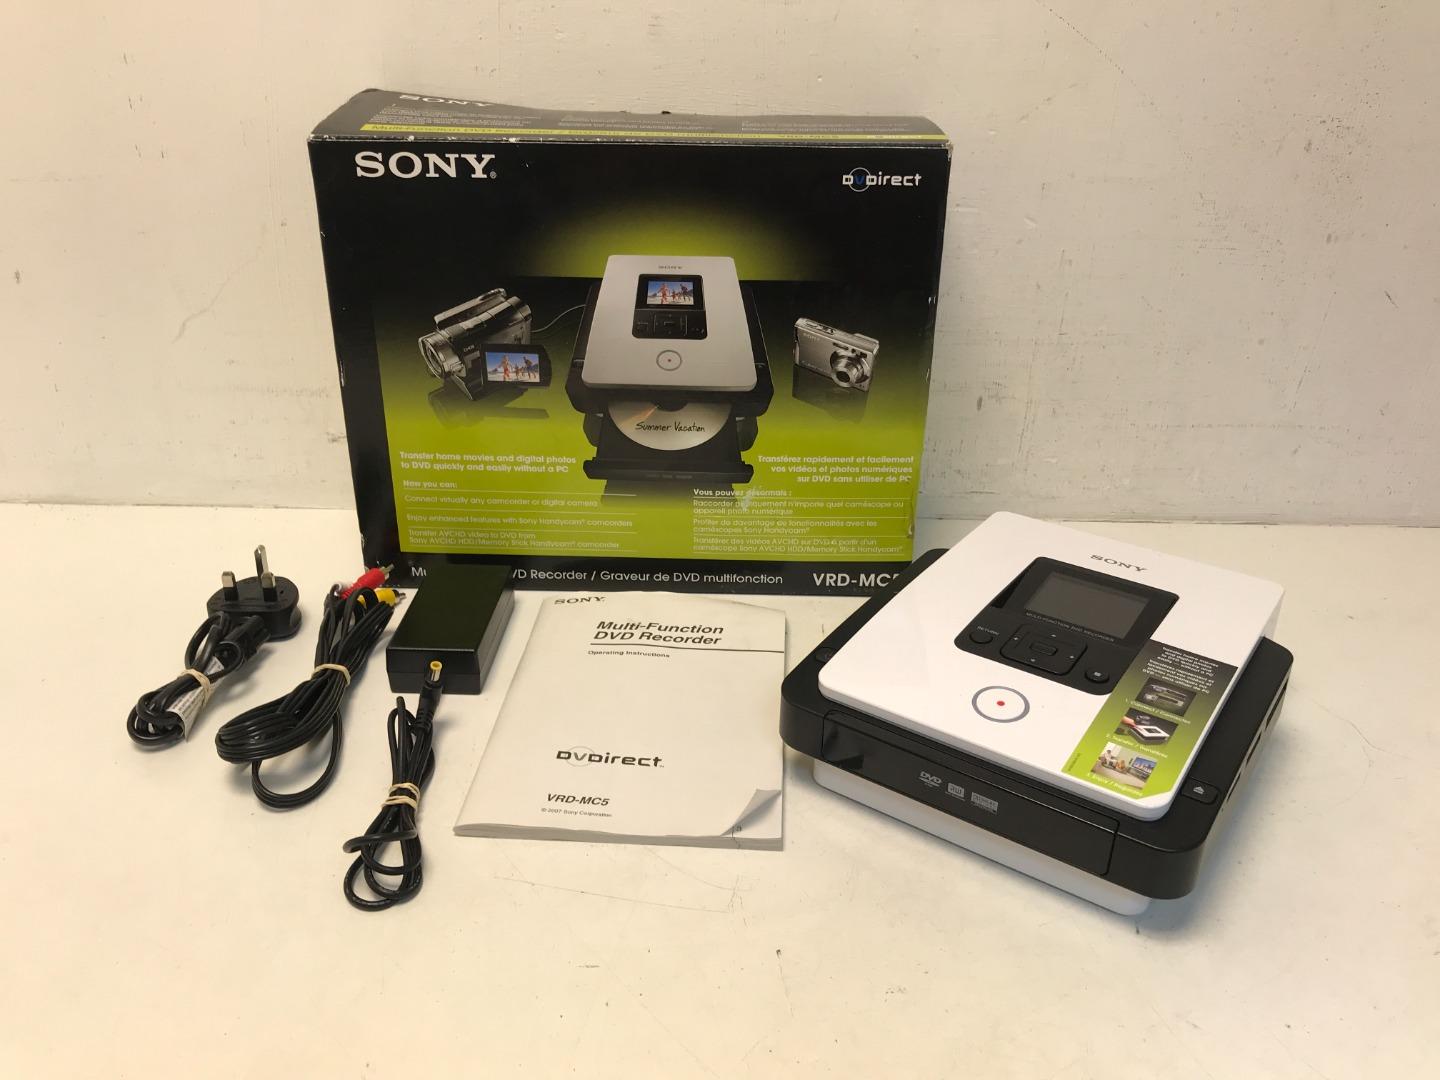 Sony VRD-MC5 Digital Video Recorder